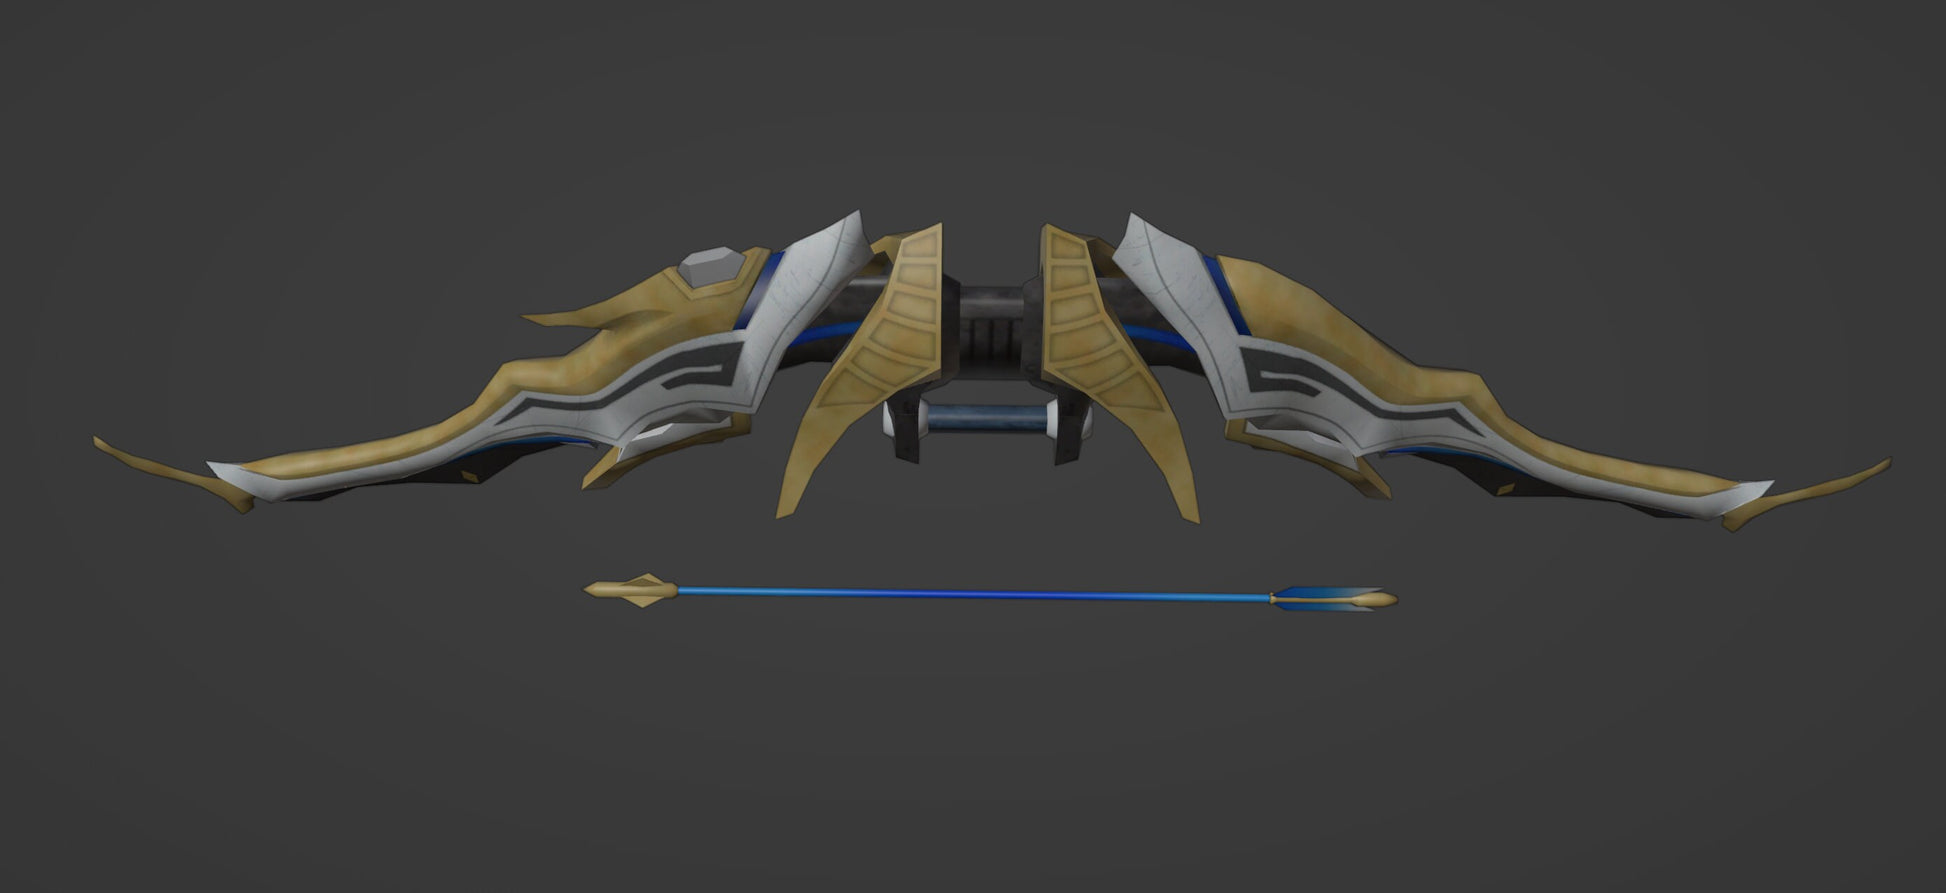 Akhos Bow - Digital 3D Model  - Professionally Designed - Arkhos Cosplay - Xeno Chronicles 2 Cosplay